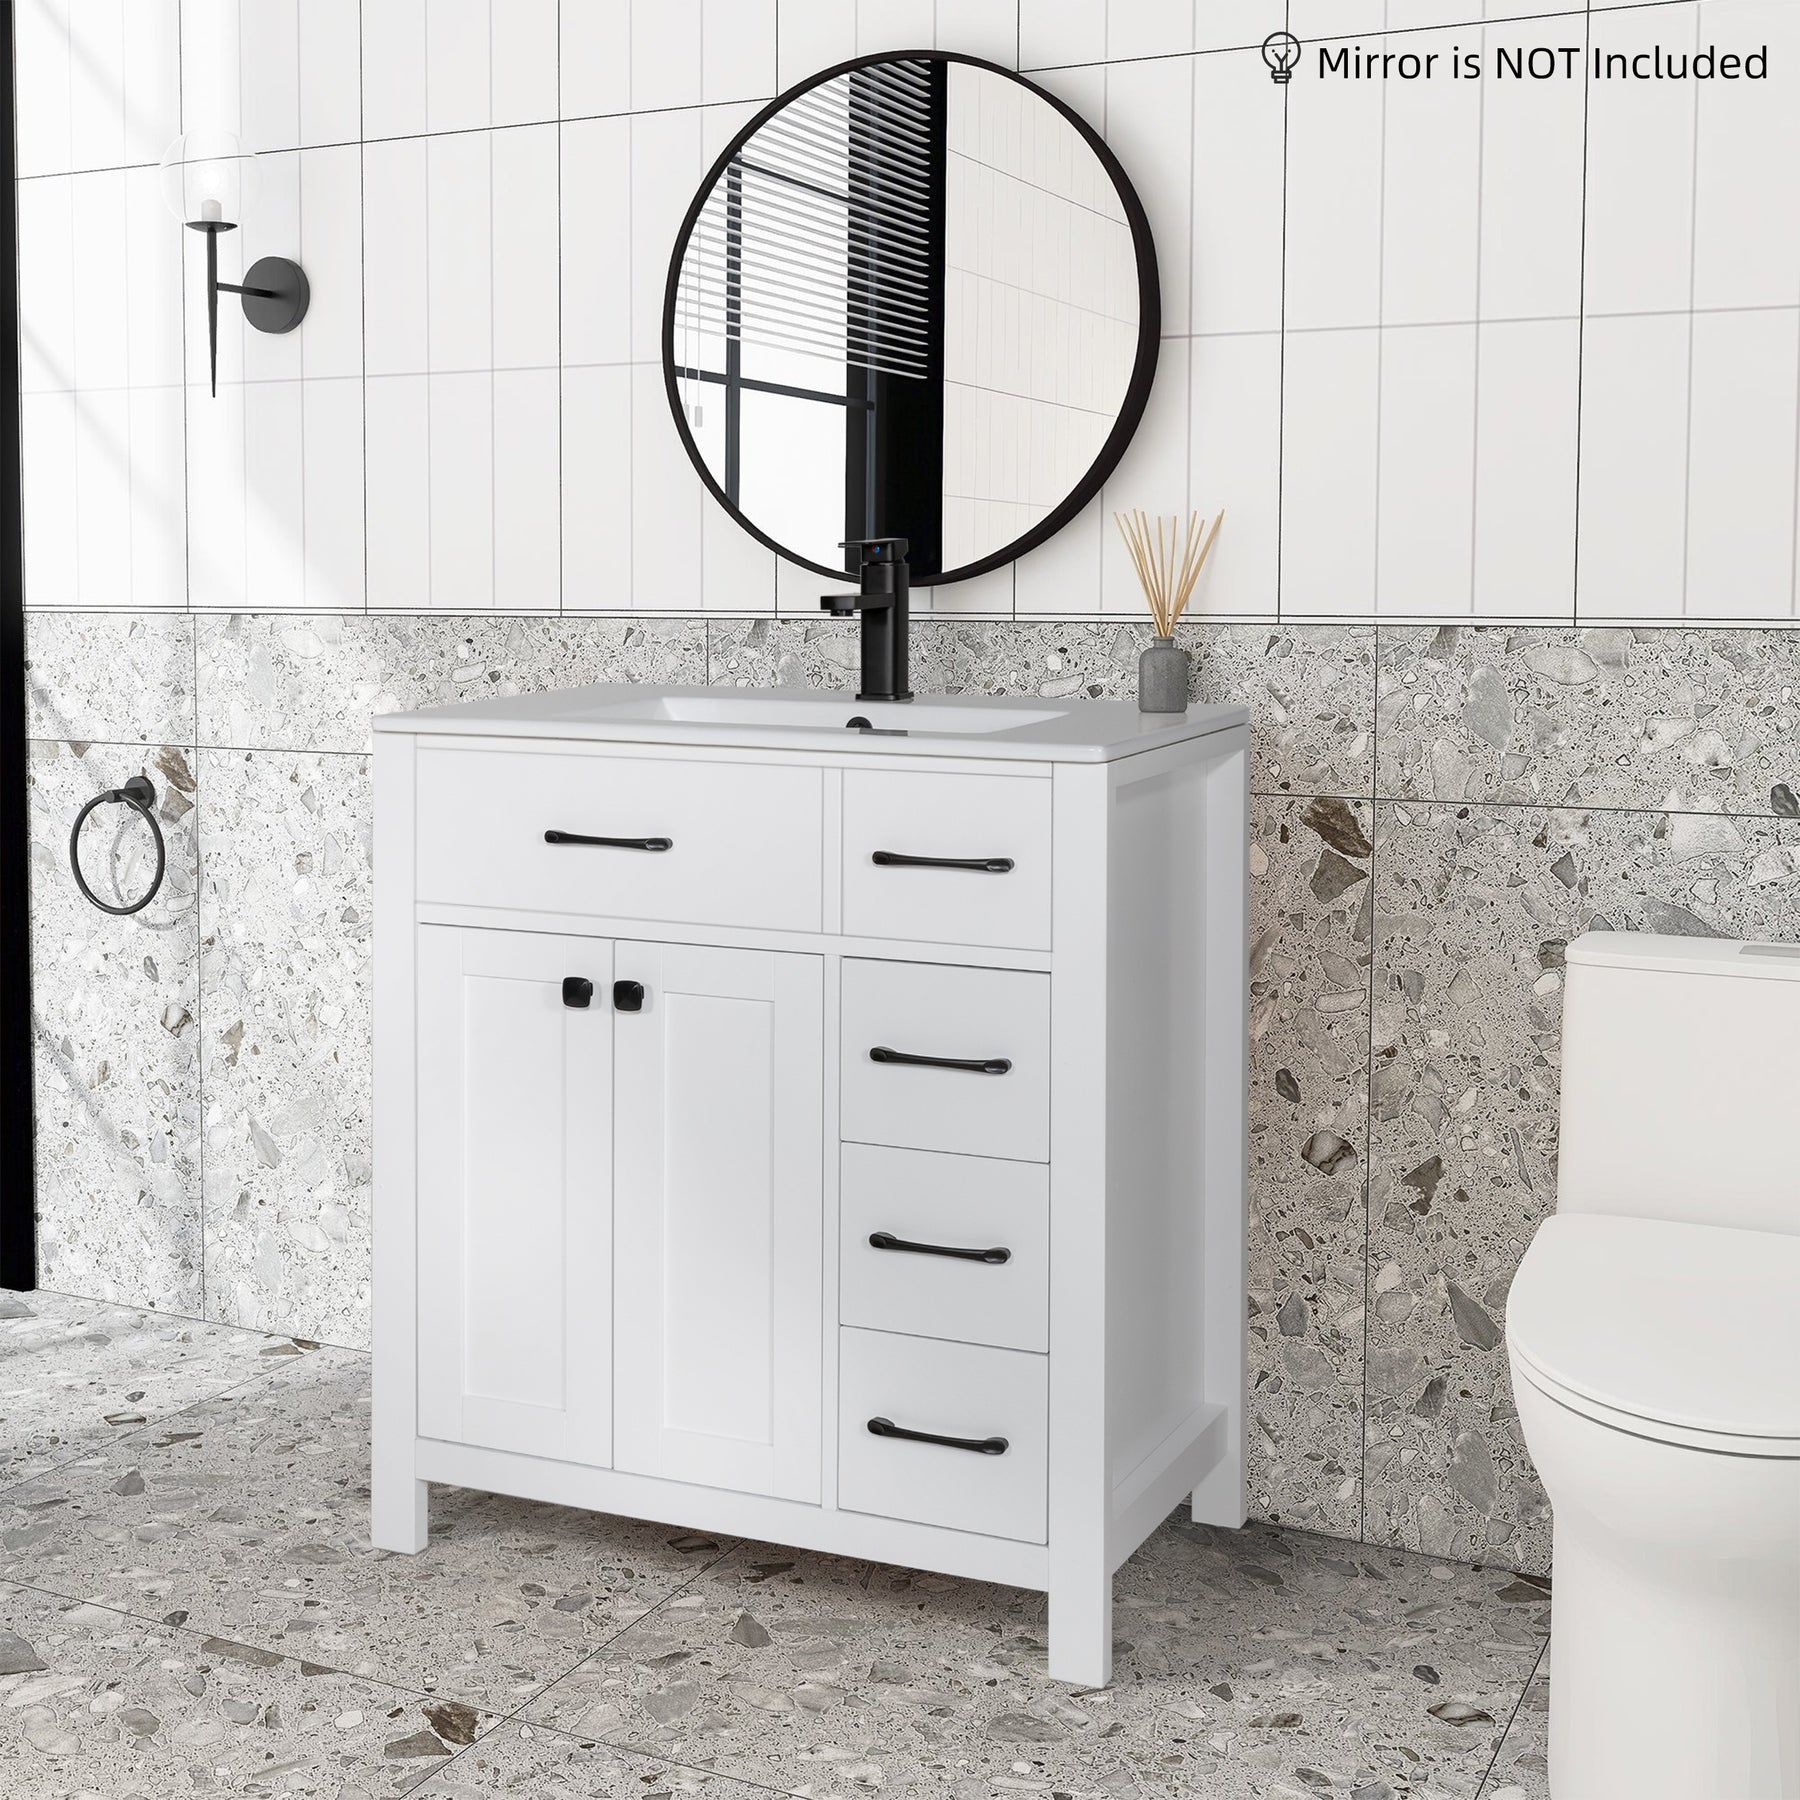 Eclife 30" Bathroom Vanity Cabinet with Undermount Vessel Sink Combo